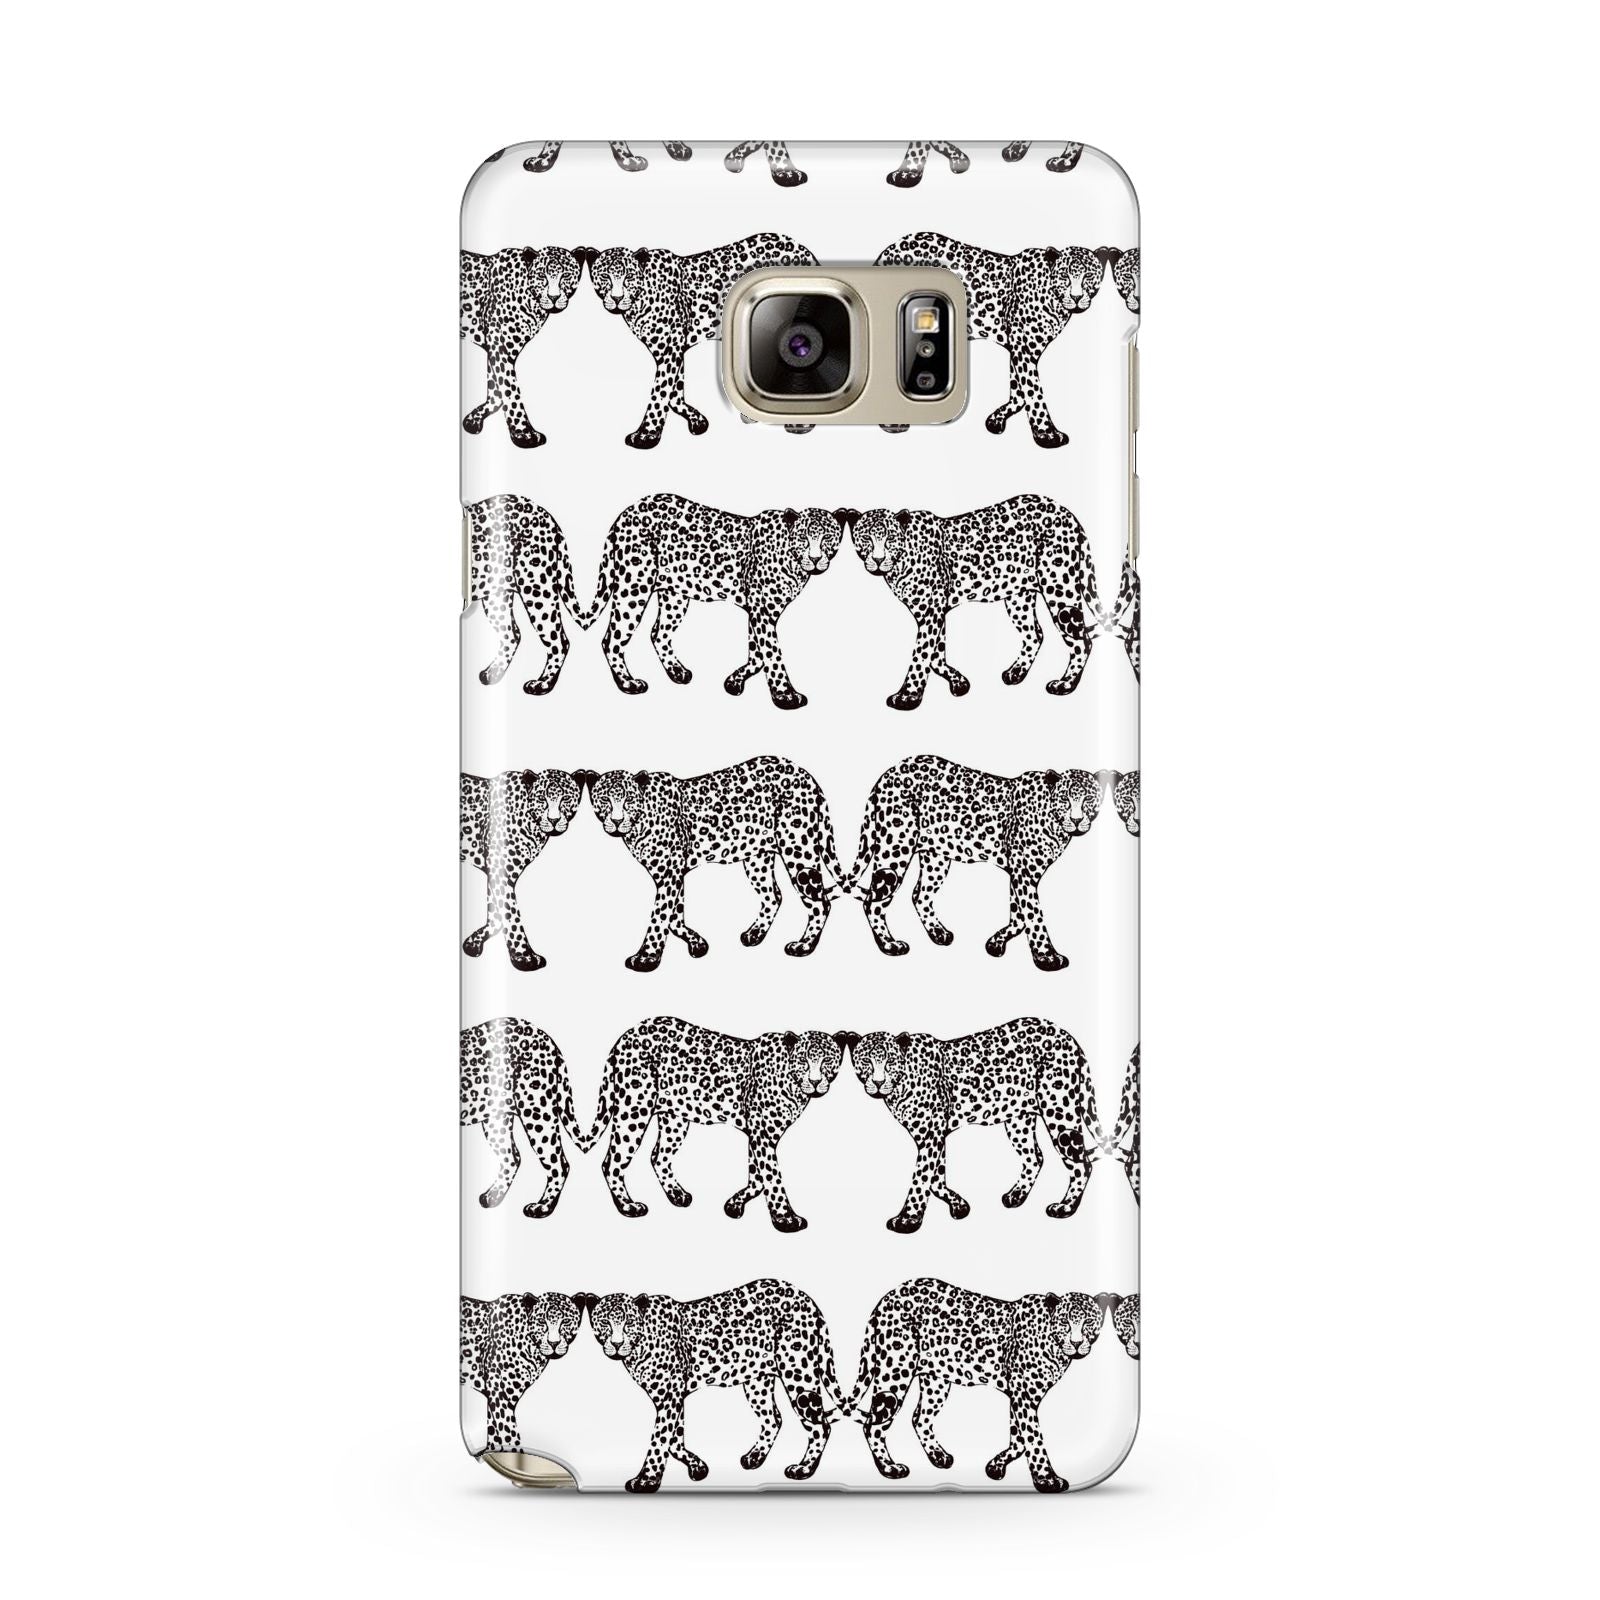 Monochrome Mirrored Leopard Print Samsung Galaxy Note 5 Case